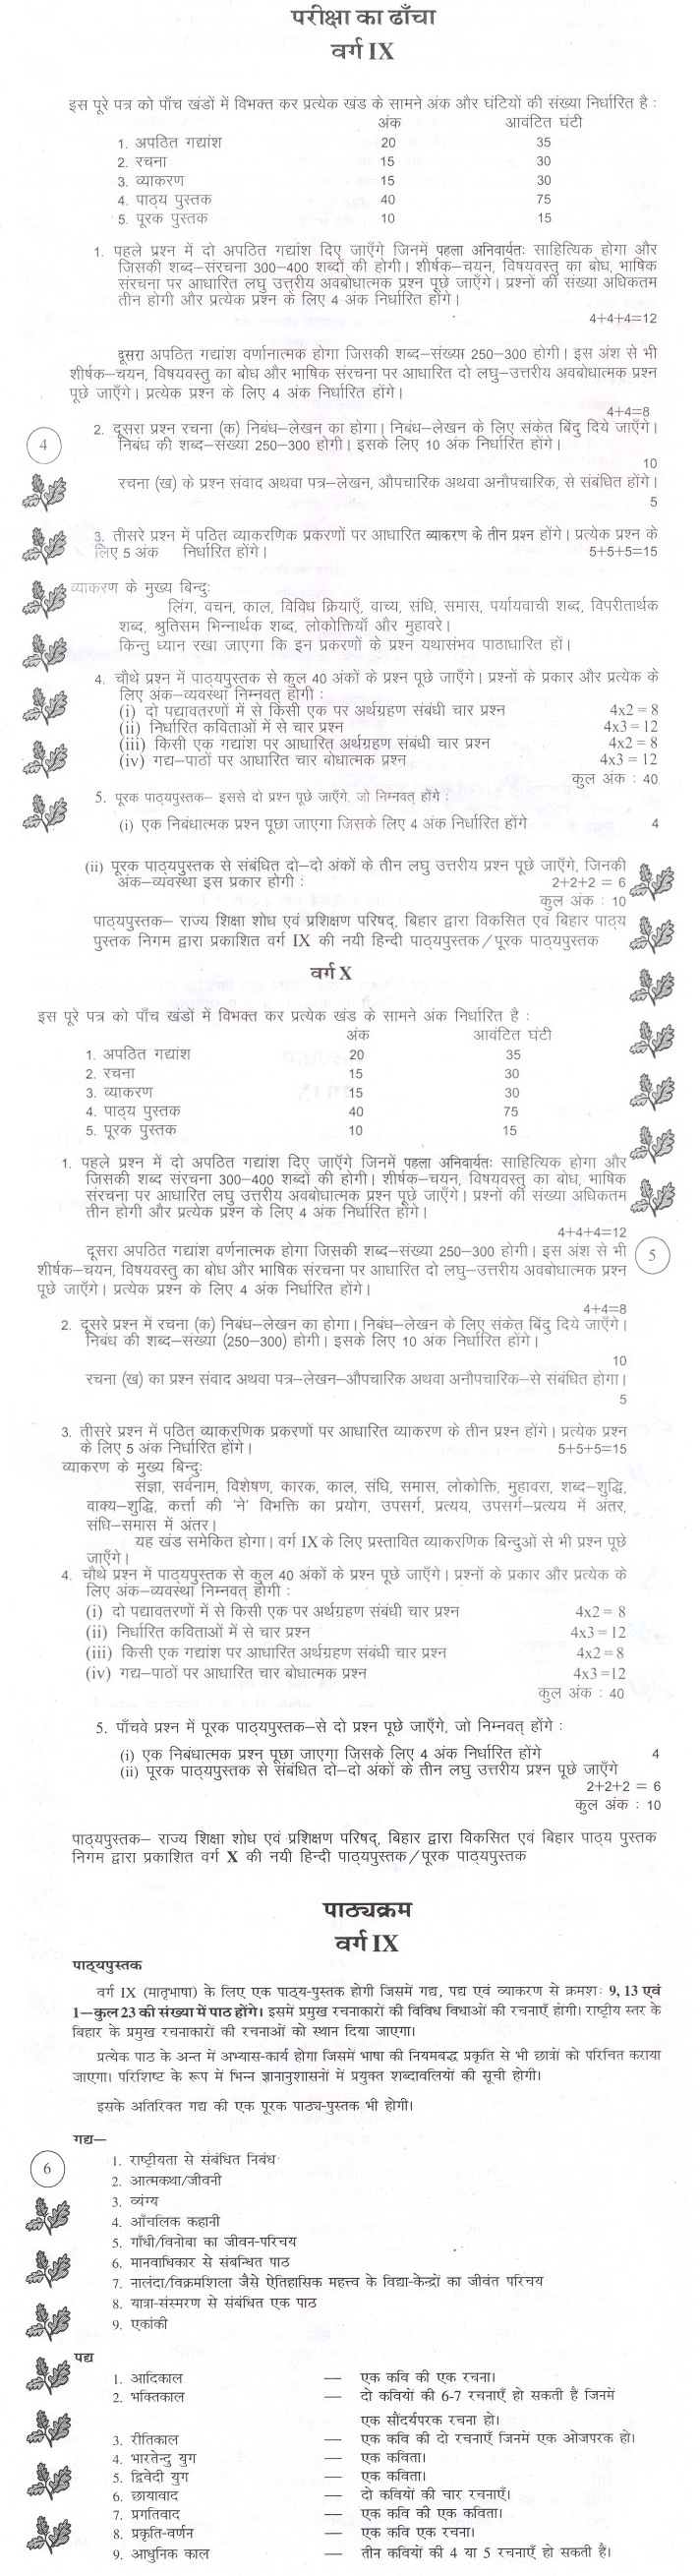 BSEB Syllabus For Class 9 10 Mother Tongue - Hindi, Urdu  Bihar Board Syllabus PDF Download